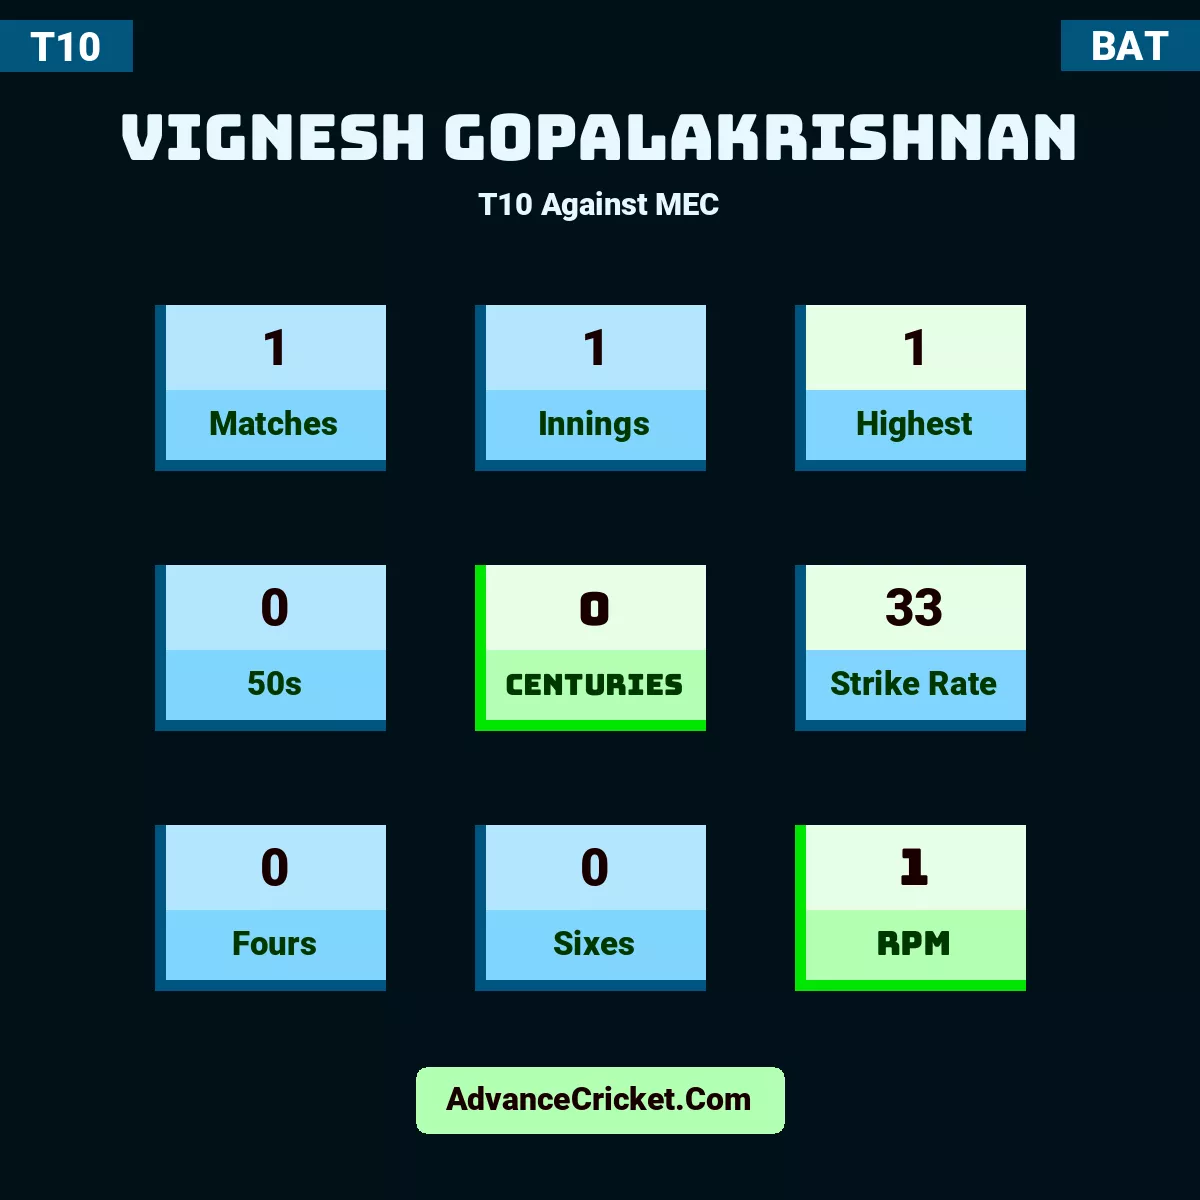 Vignesh Gopalakrishnan T10  Against MEC, Vignesh Gopalakrishnan played 1 matches, scored 1 runs as highest, 0 half-centuries, and 0 centuries, with a strike rate of 33. V.Gopalakrishnan hit 0 fours and 0 sixes, with an RPM of 1.